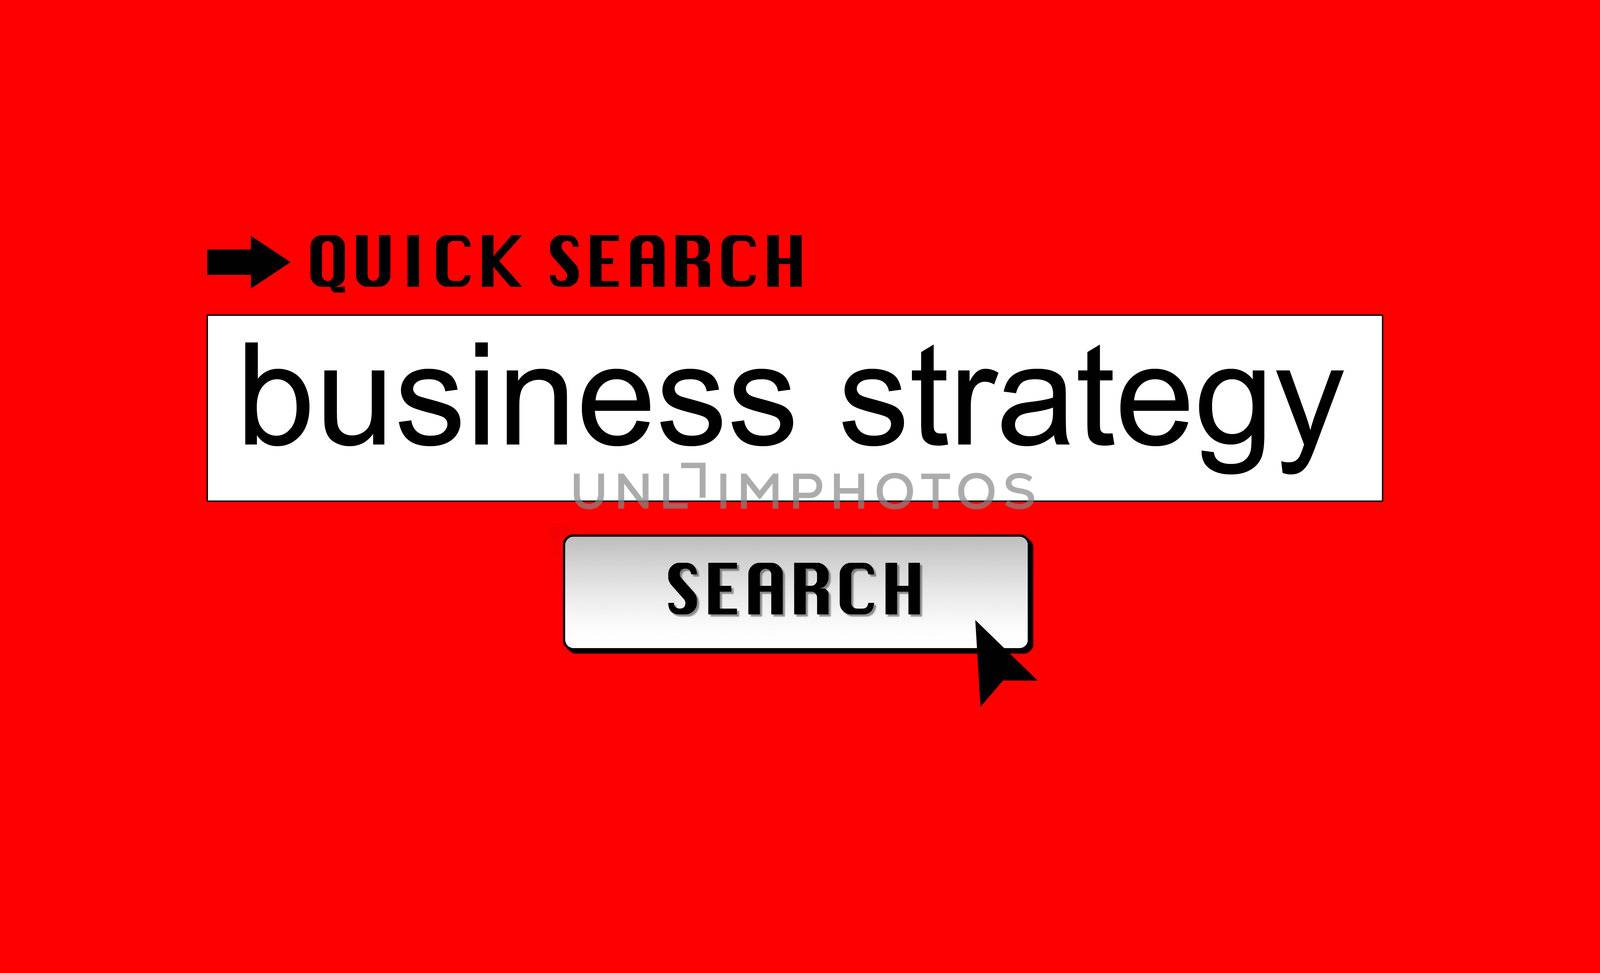 Business Strategy Search by chrisdorney